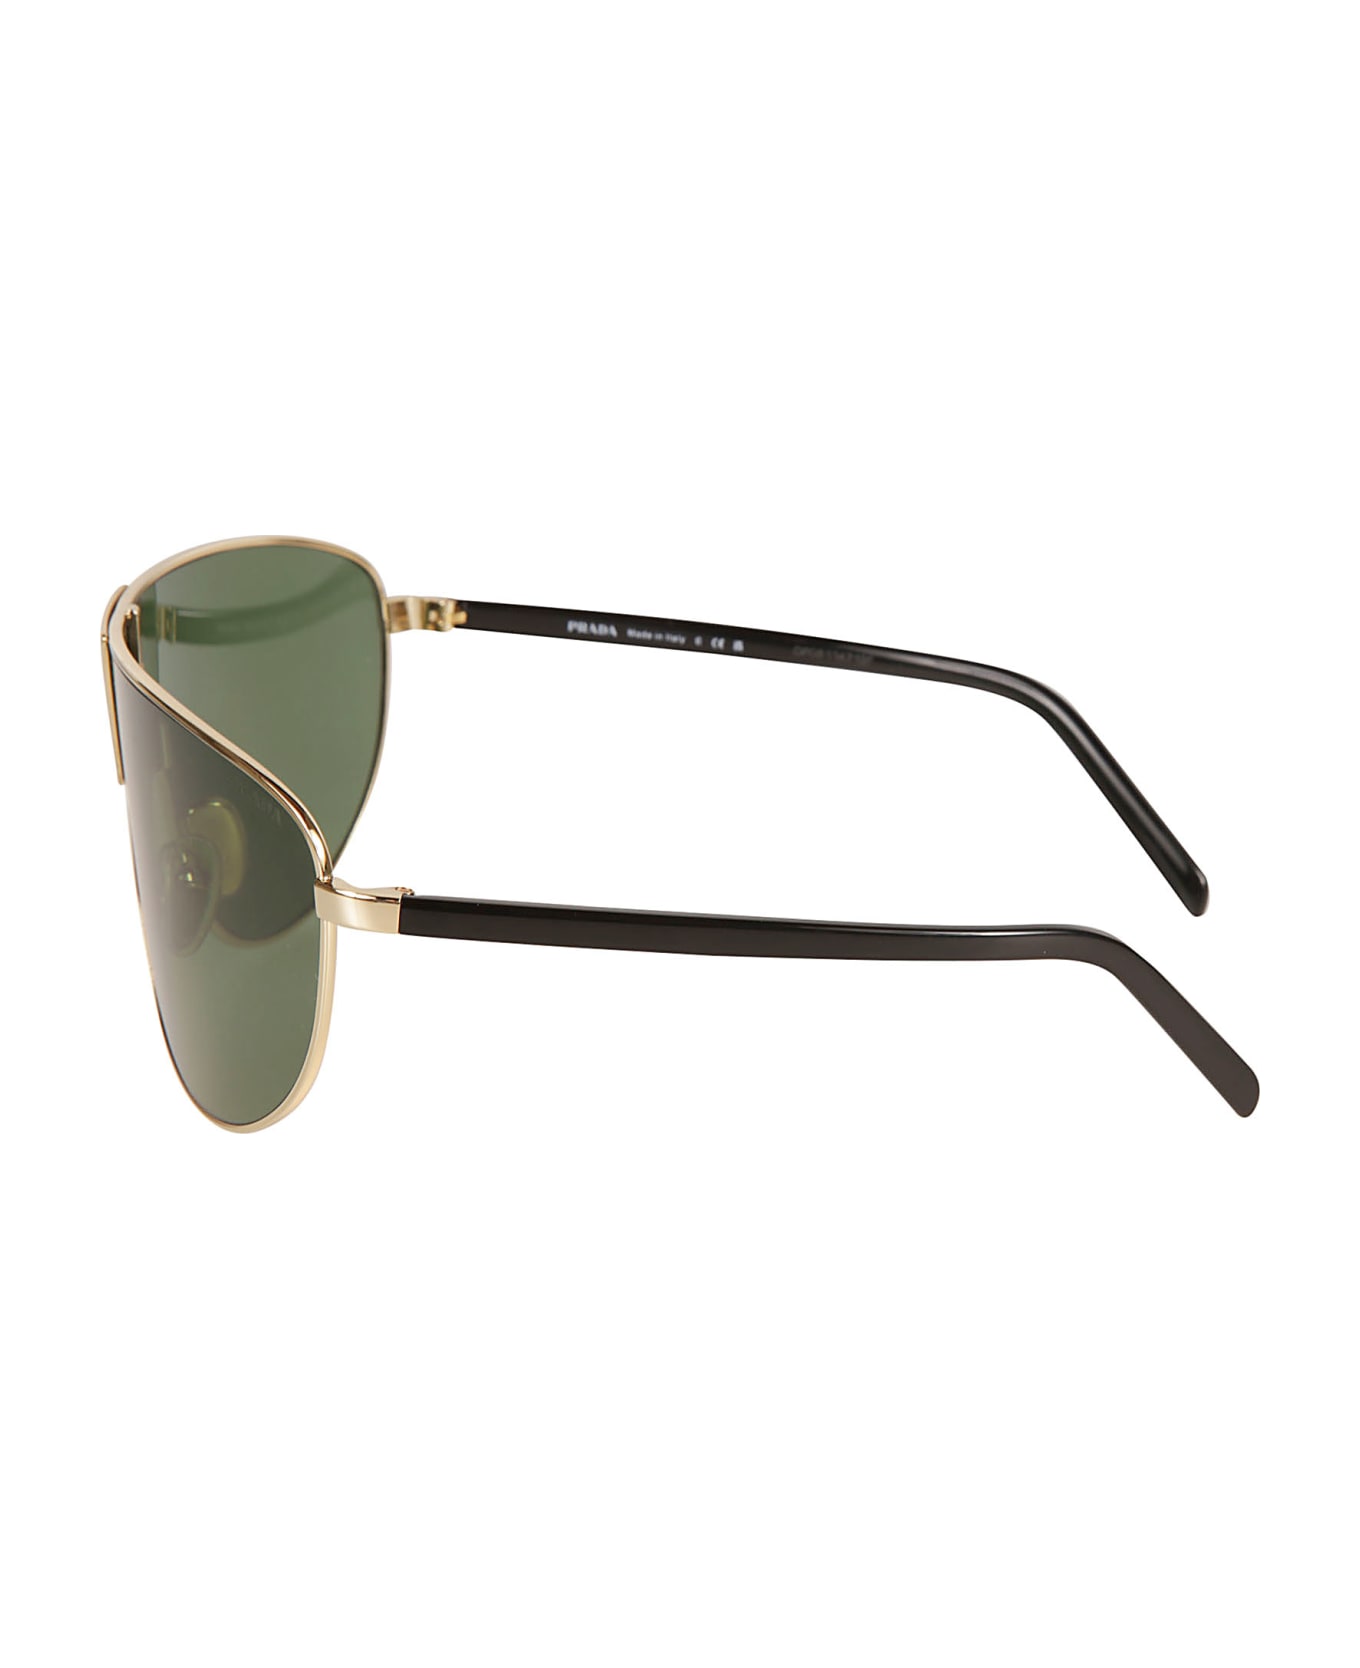 Prada Eyewear 69zs Sole Sunglasses - 5AK05V